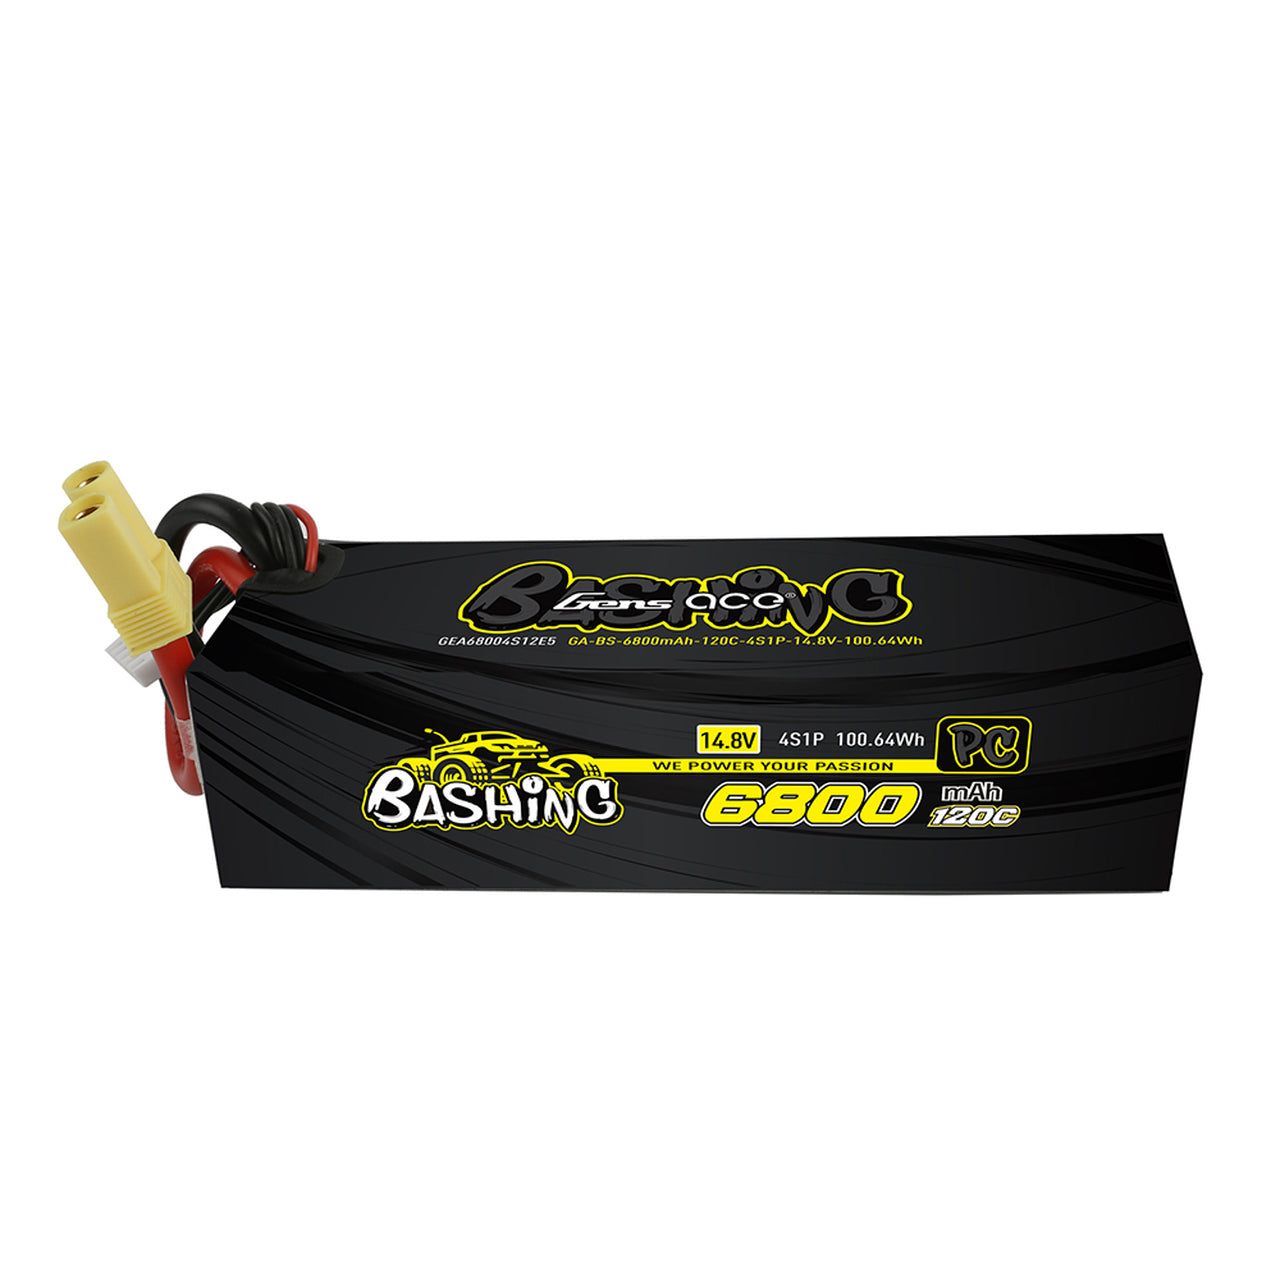 Gens Ace 6800mAh 14.8V 120C 4S1P Lipo Battery Pack With EC5 Plug